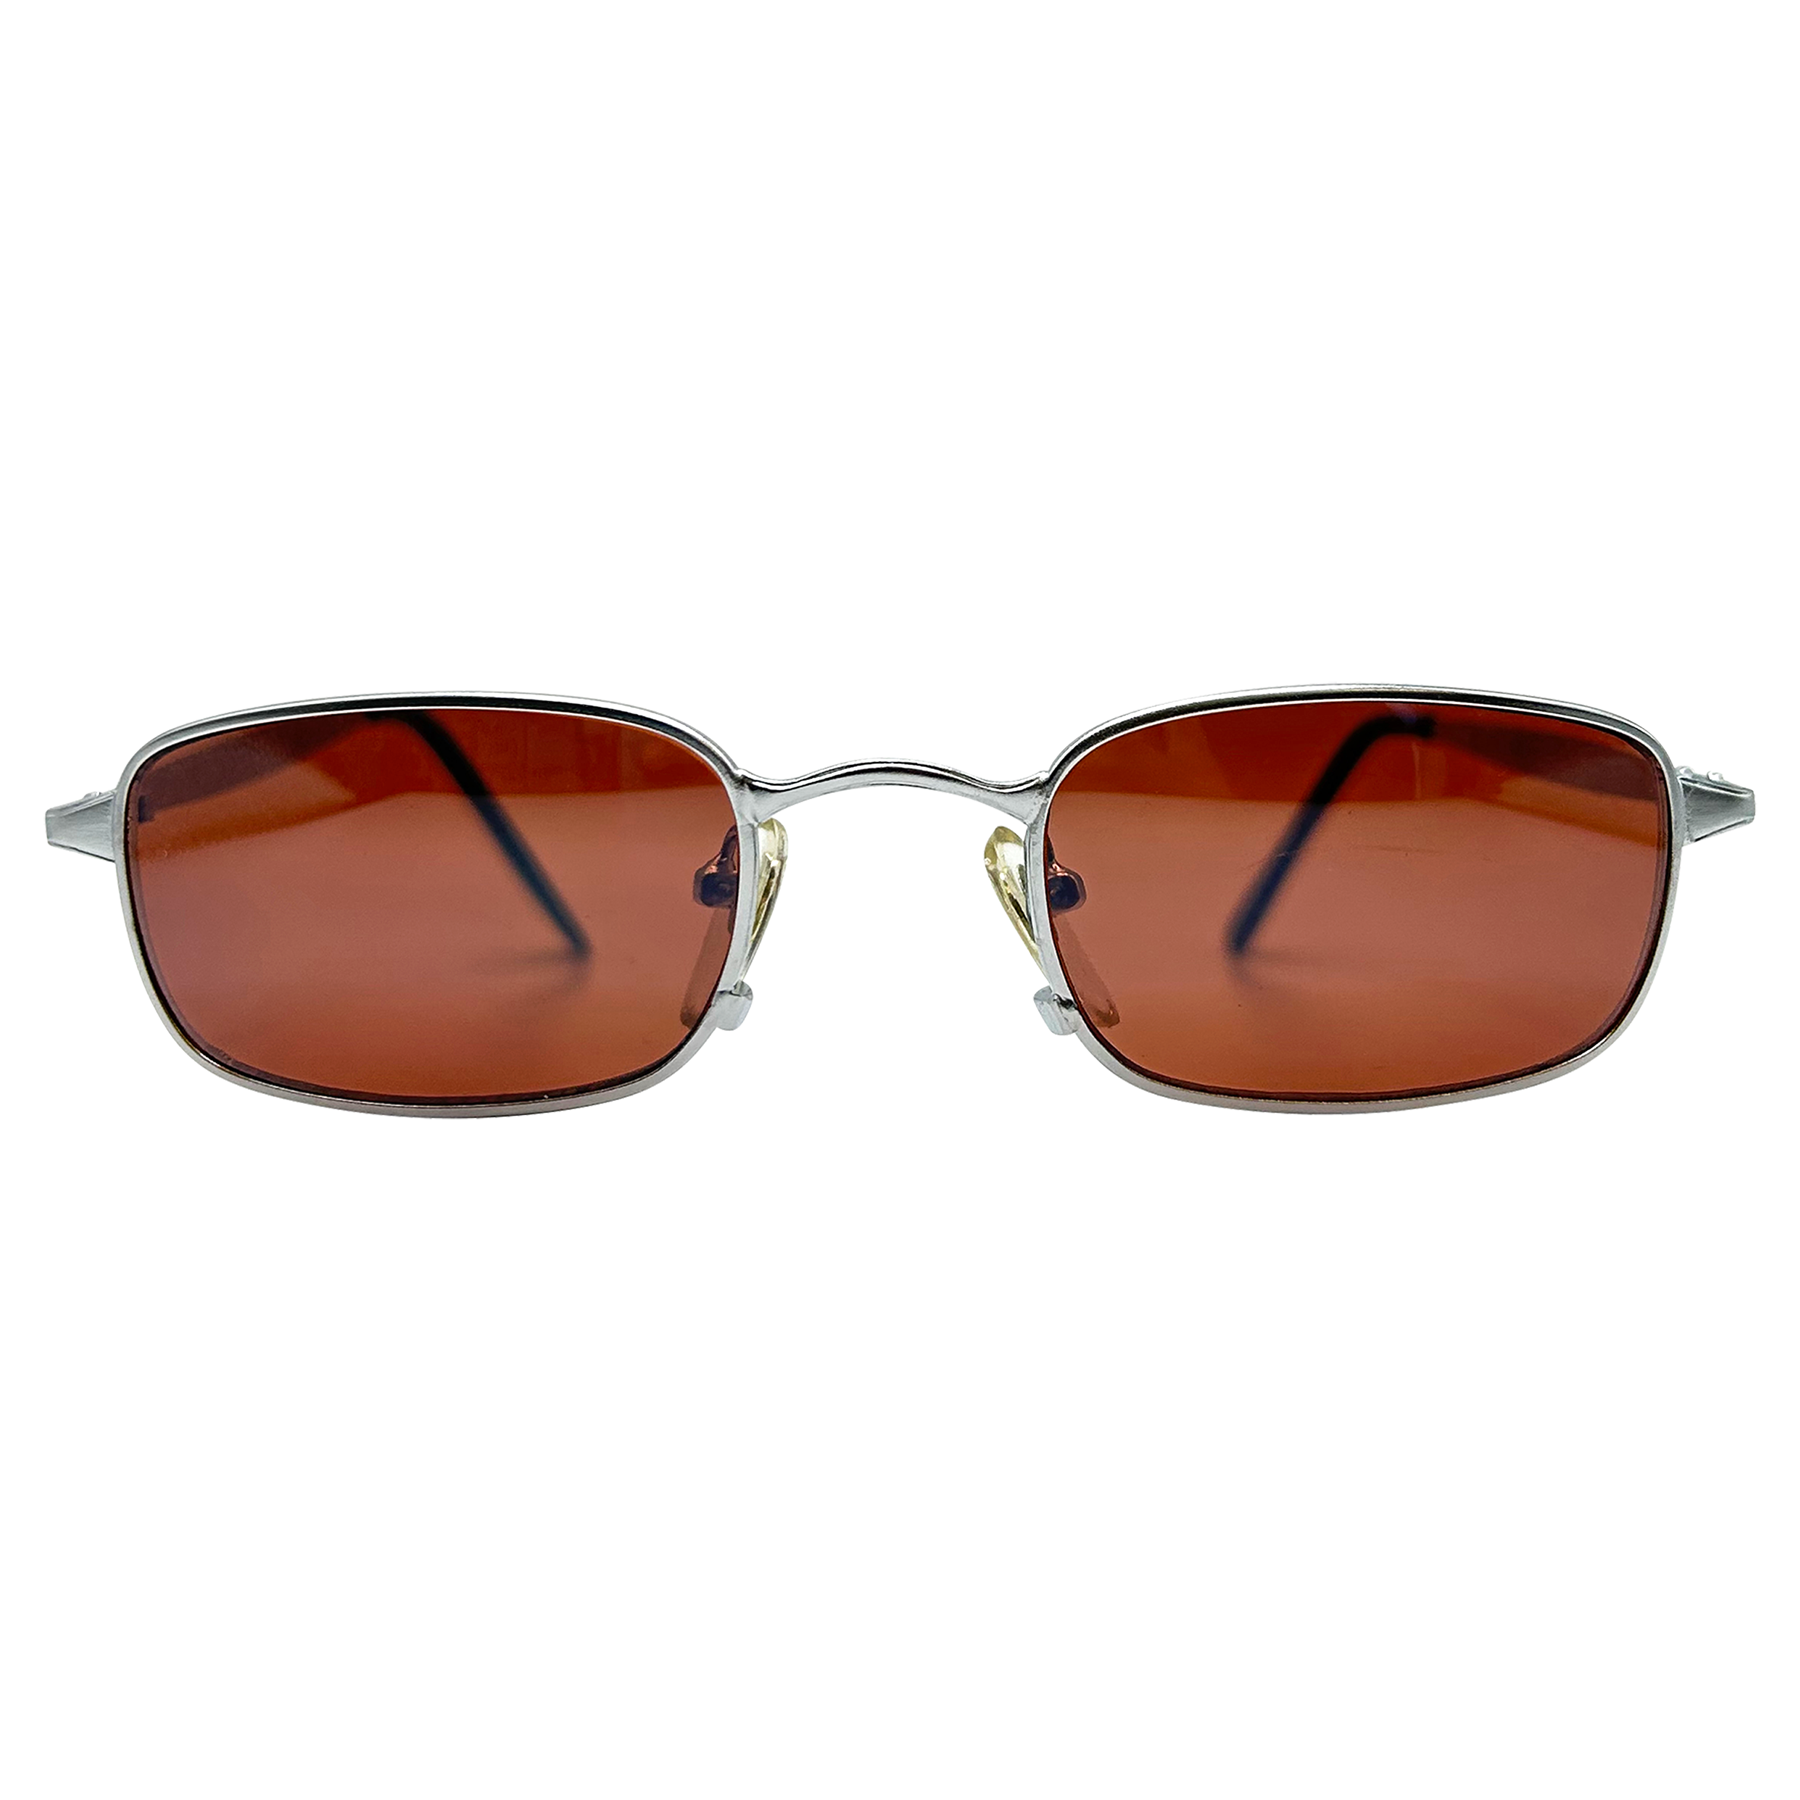 ROBERT Square 90s Sunglasses | Blue-Blocker | Day Driving